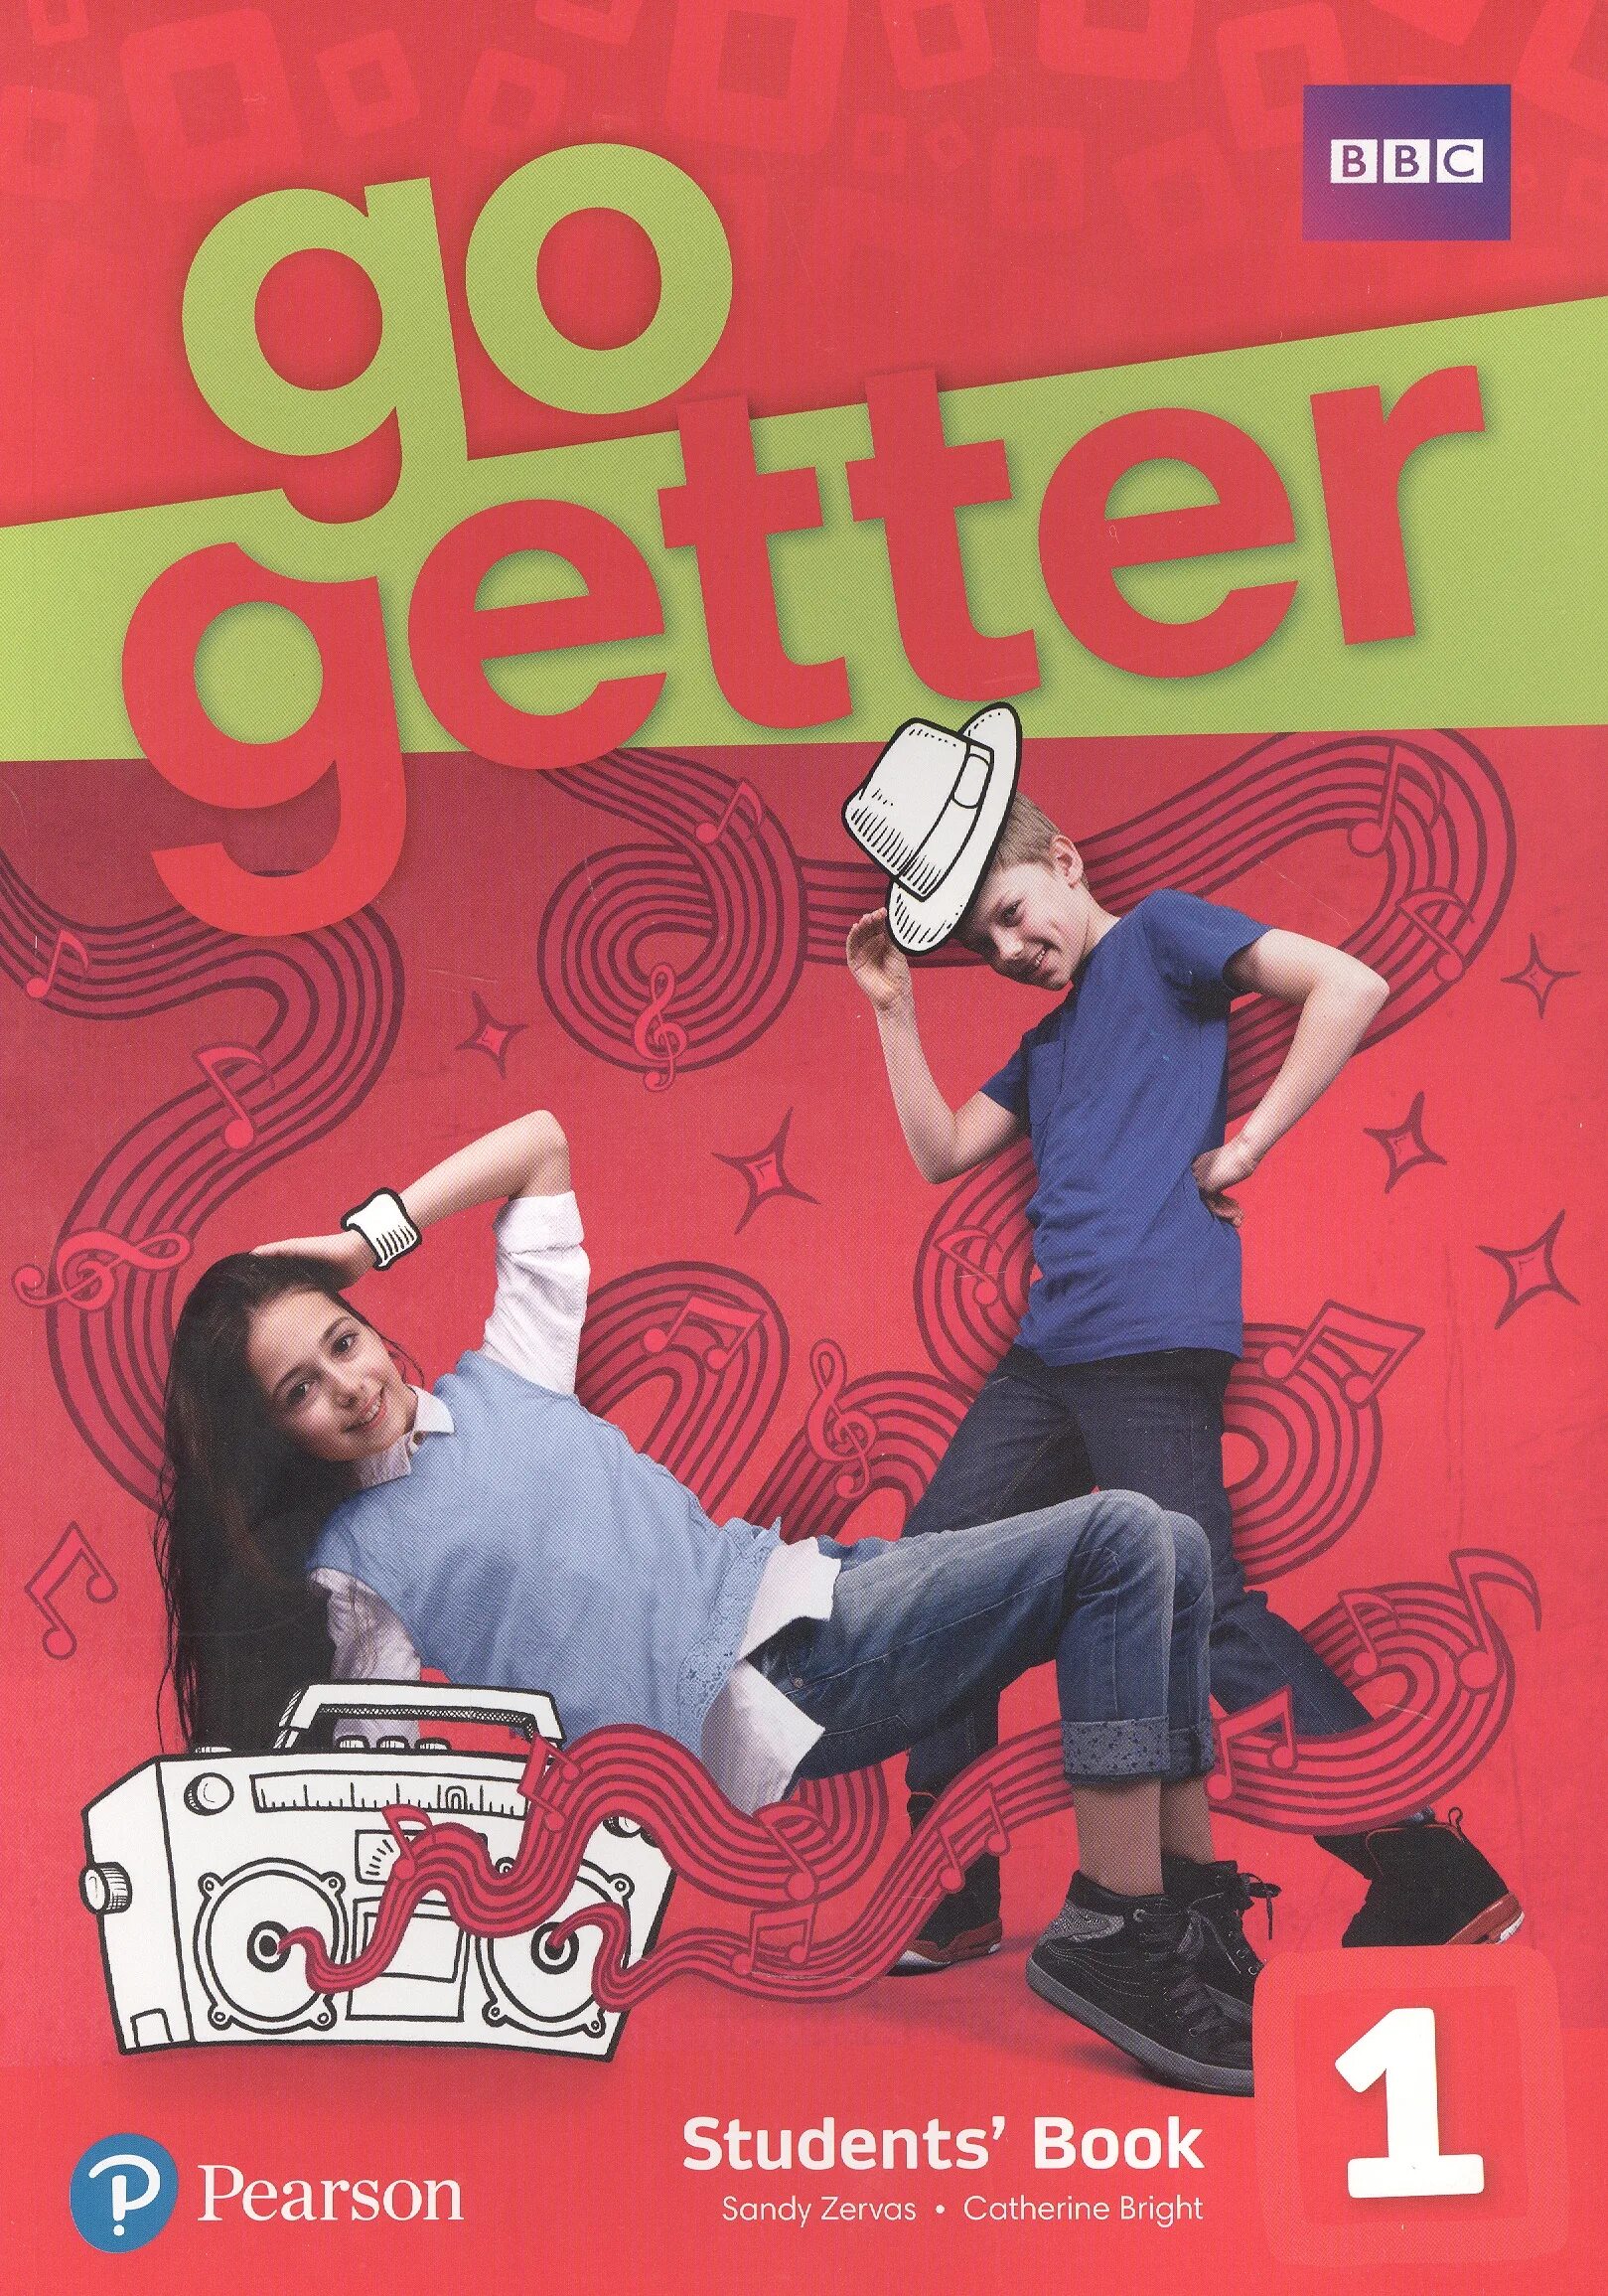 Go getter shopping. Go Getter 1 student’s book учебник. Go Getter 3 student's book Workbook. Go Getter 1. Учебник Pearson go Getter.